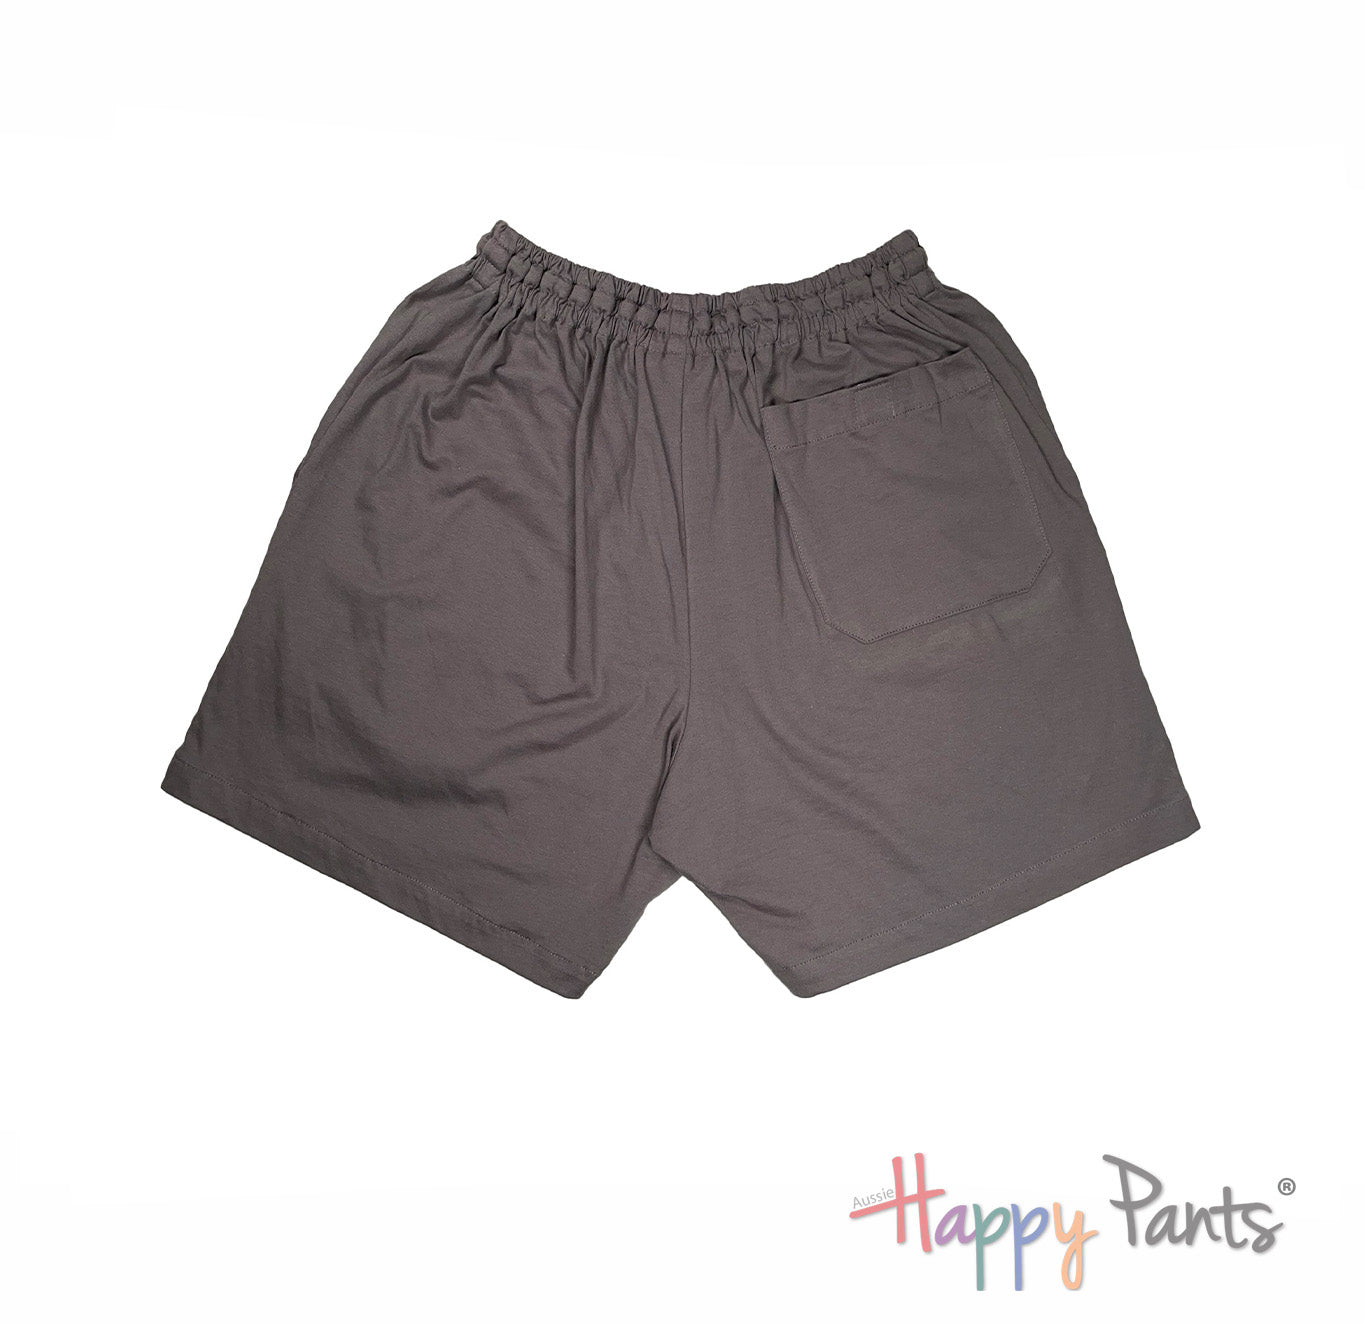 Elephant Gray Plain Classic Shorts